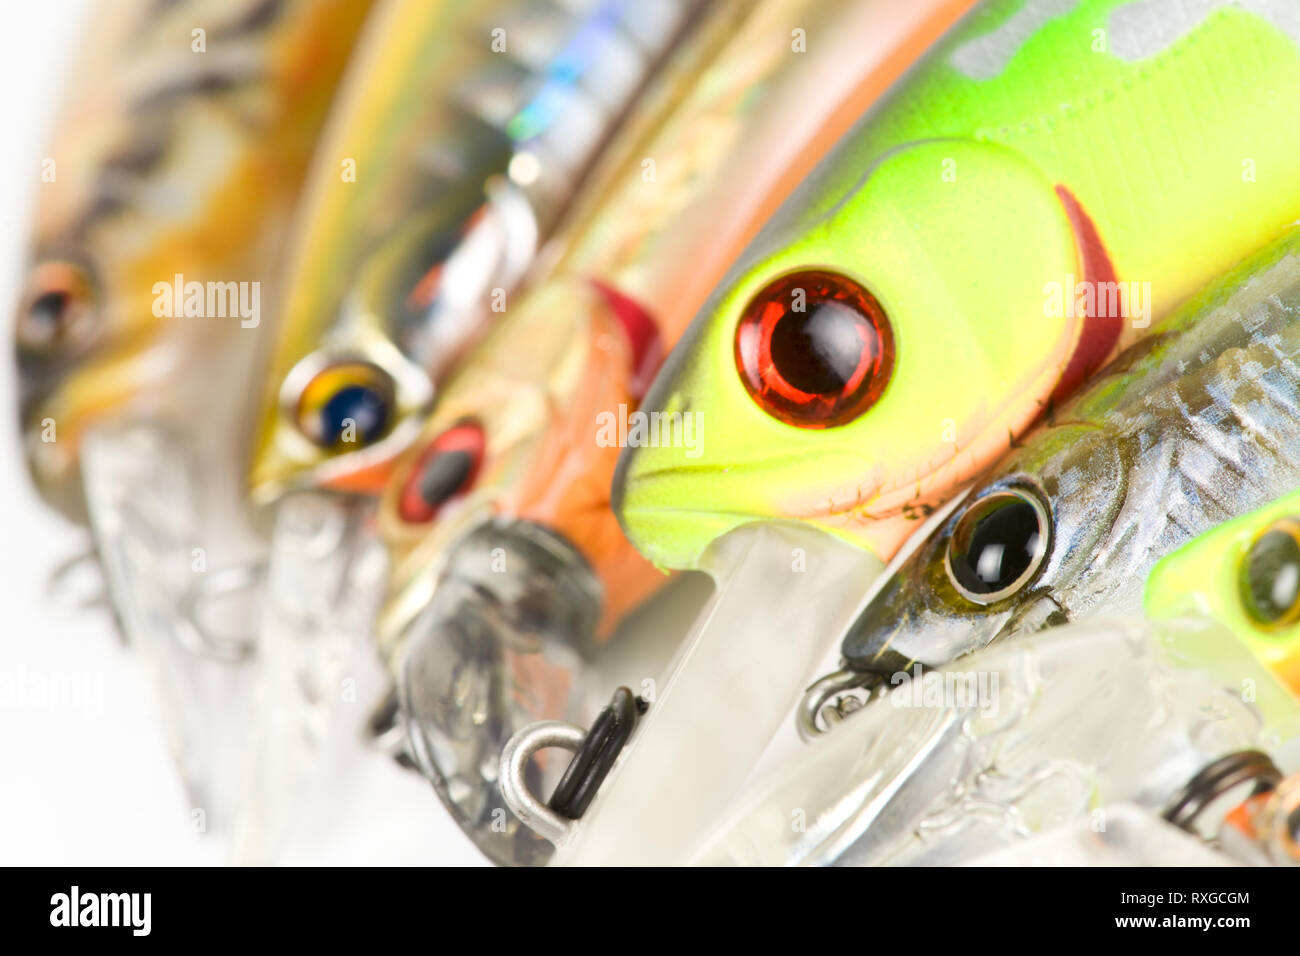 Plastic fishing lures, extreme close-up 100/2.8 Macro lens used Stock Photo